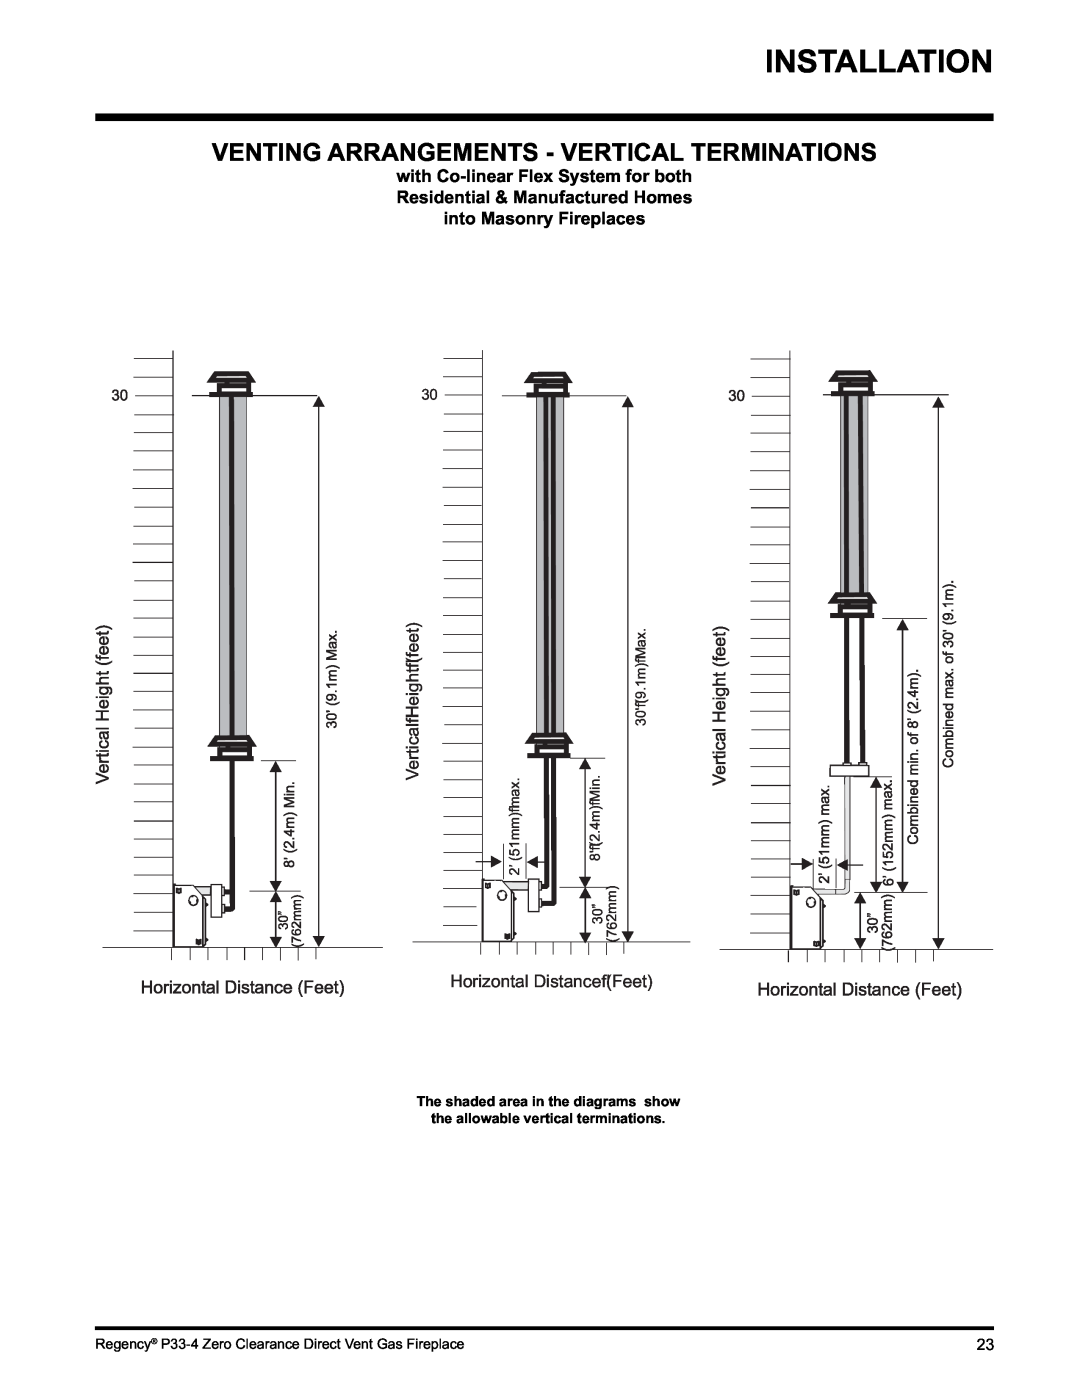 Regency P33-NG4 Venting Arrangements - Vertical Terminations, VerticalHeightfeet, Horizontal Distance Feet, 762mm 